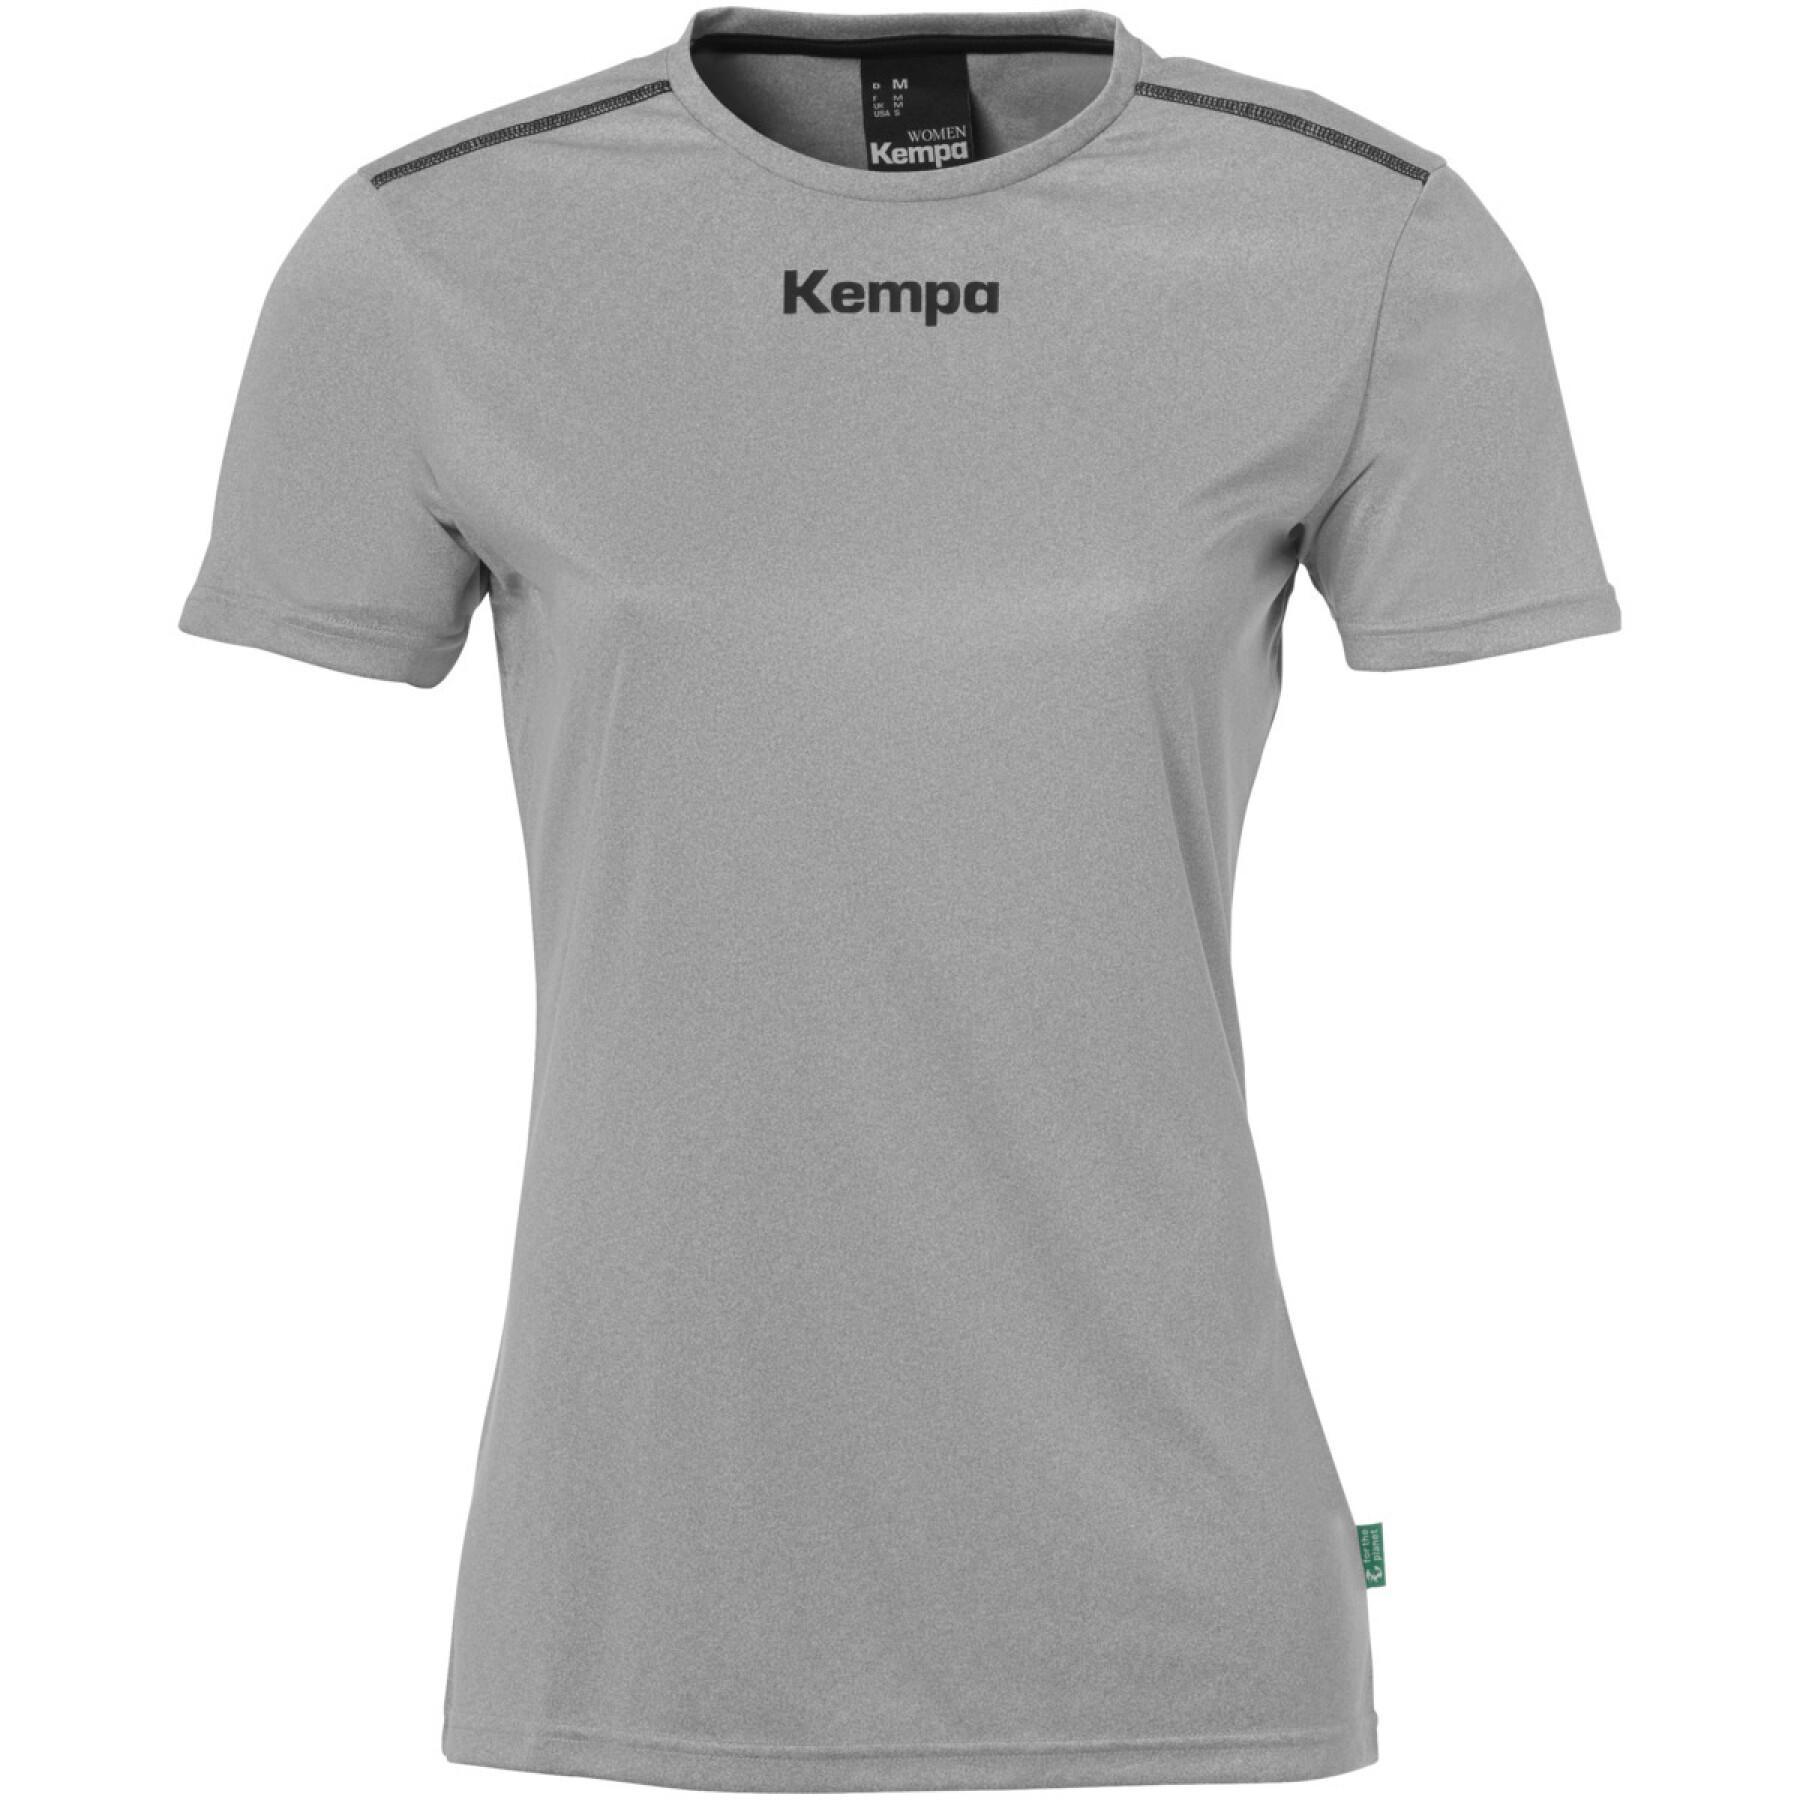 Women's jersey Kempa Poly